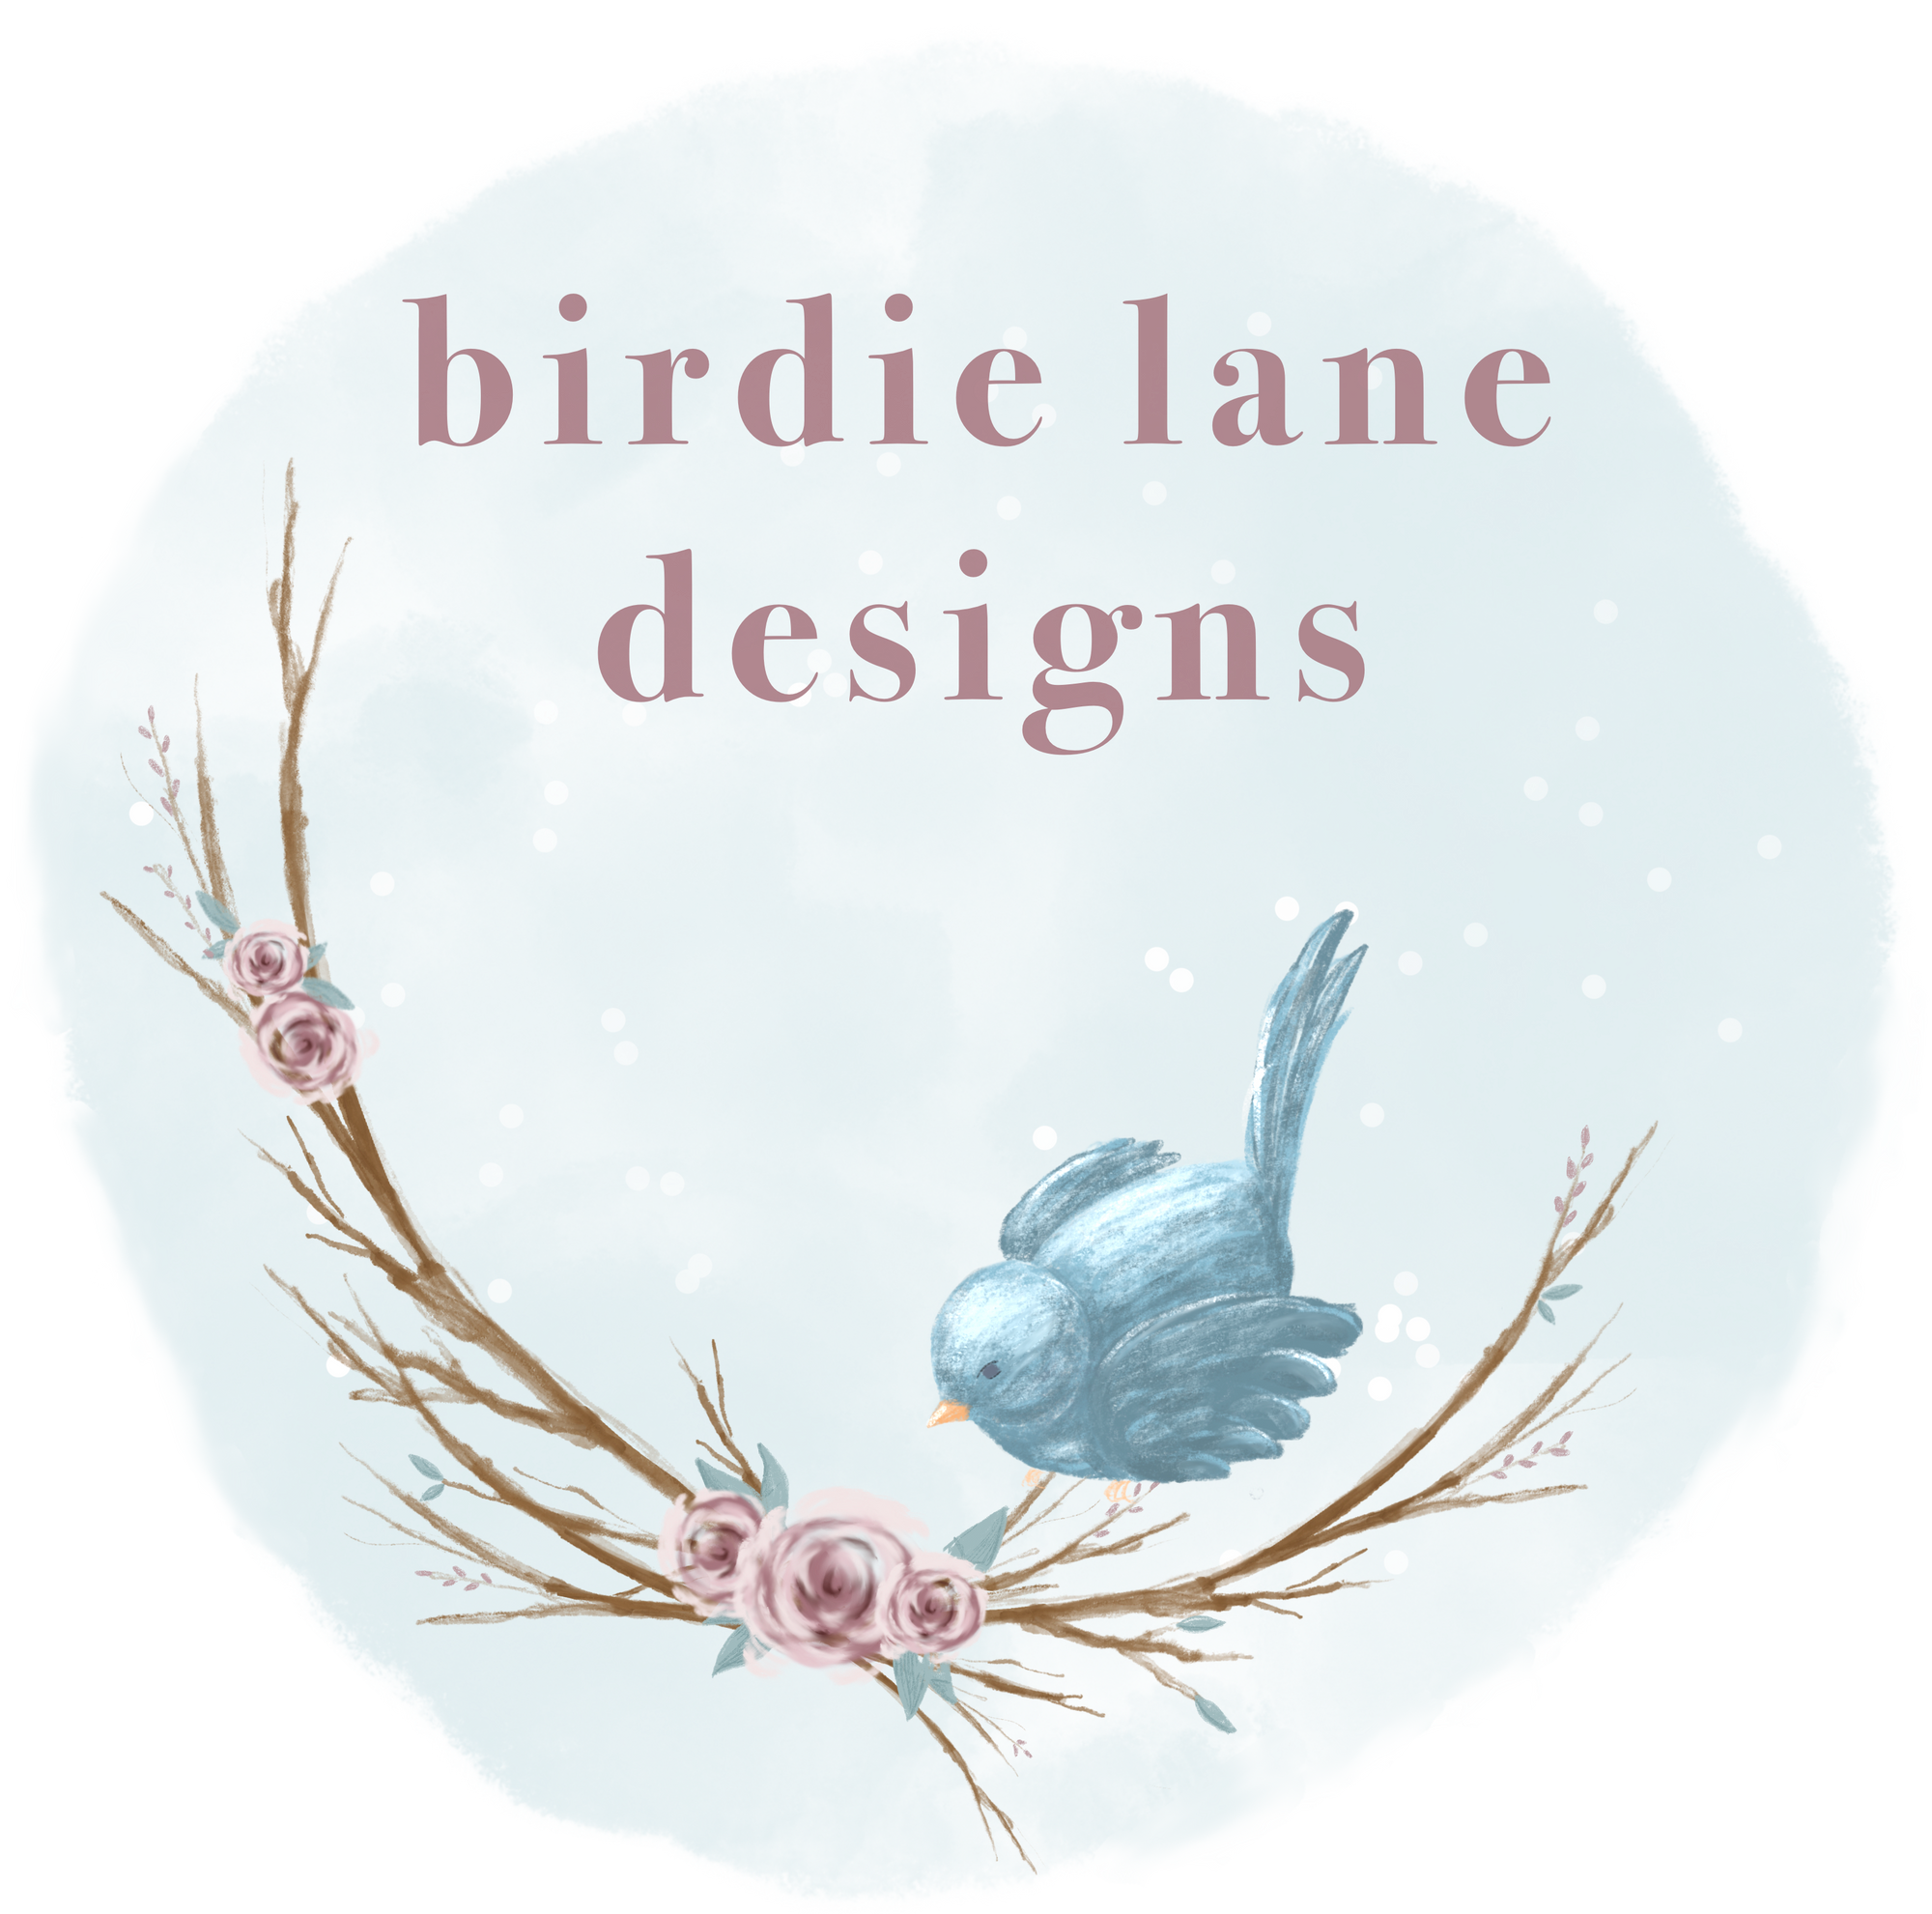 Designs by Birdie Lane Designs